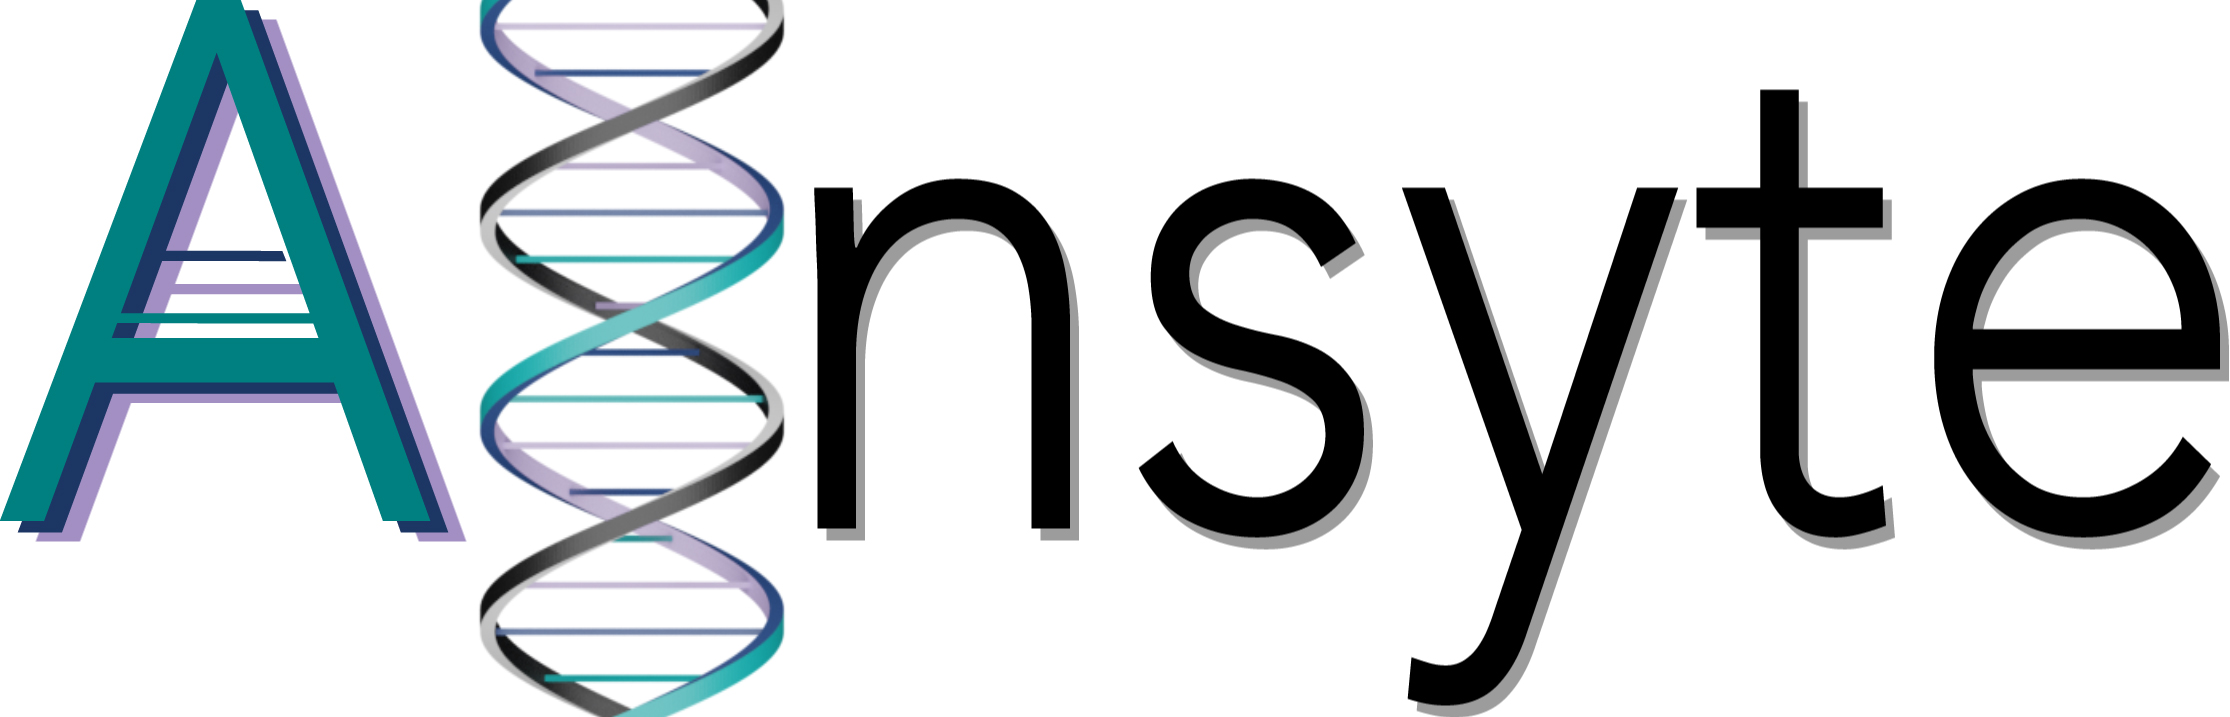 logo AInsyte